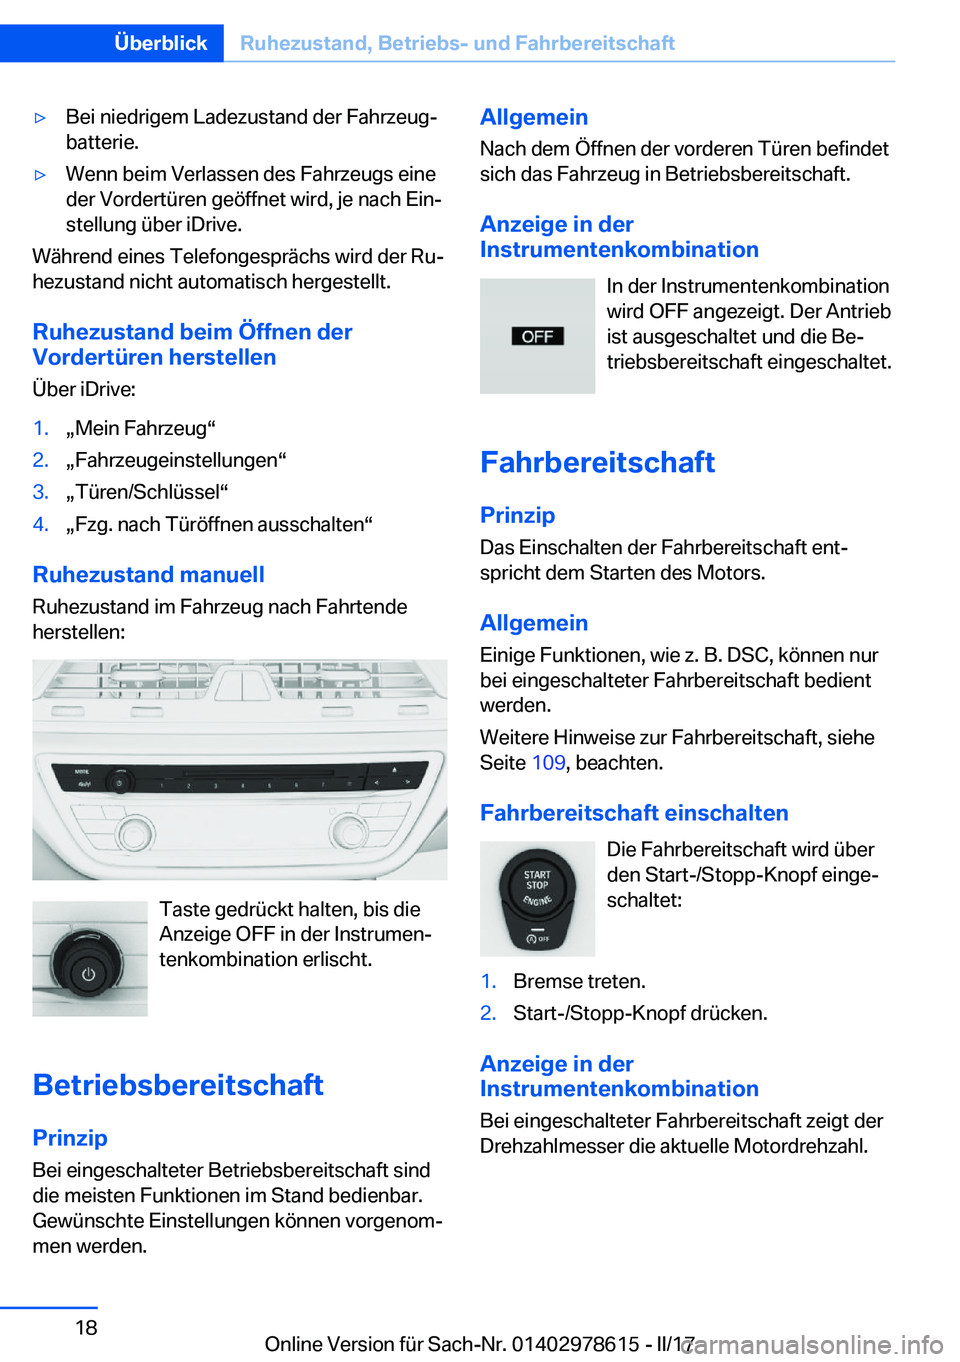 BMW 7 SERIES 2018  Betriebsanleitungen (in German) 'y�B�e�i� �n�i�e�d�r�i�g�e�m� �L�a�d�e�z�u�s�t�a�n�d� �d�e�r� �F�a�h�r�z�e�u�gj
�b�a�t�t�e�r�i�e�.'y�W�e�n�n� �b�e�i�m� �V�e�r�l�a�s�s�e�n� �d�e�s� �F�a�h�r�z�e�u�g�s� �e�i�n�e
�d�e�r� �V�o�r